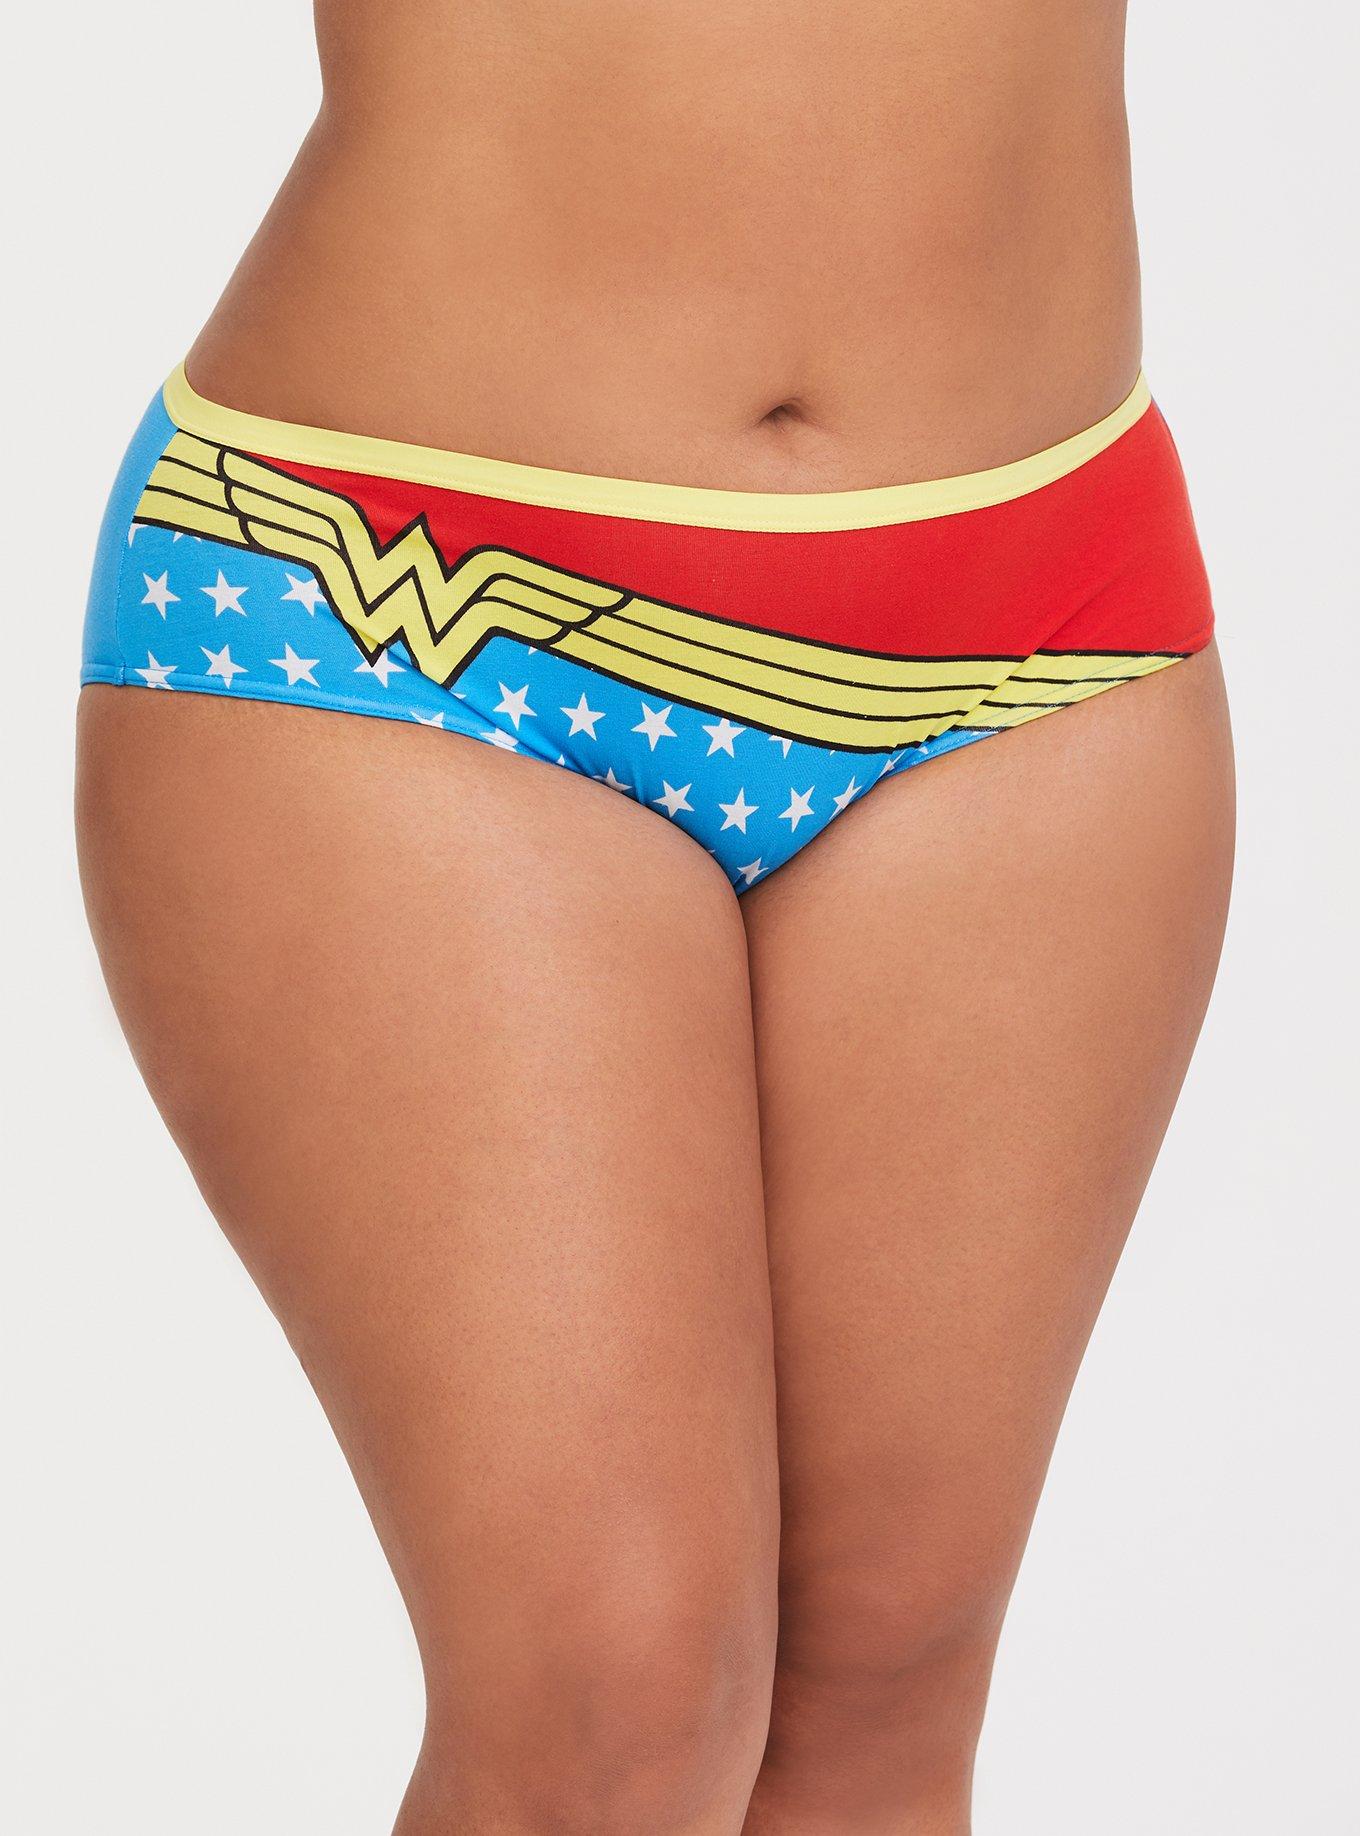 Plus Size - Wonder Woman Cotton Hipster Panty - Torrid